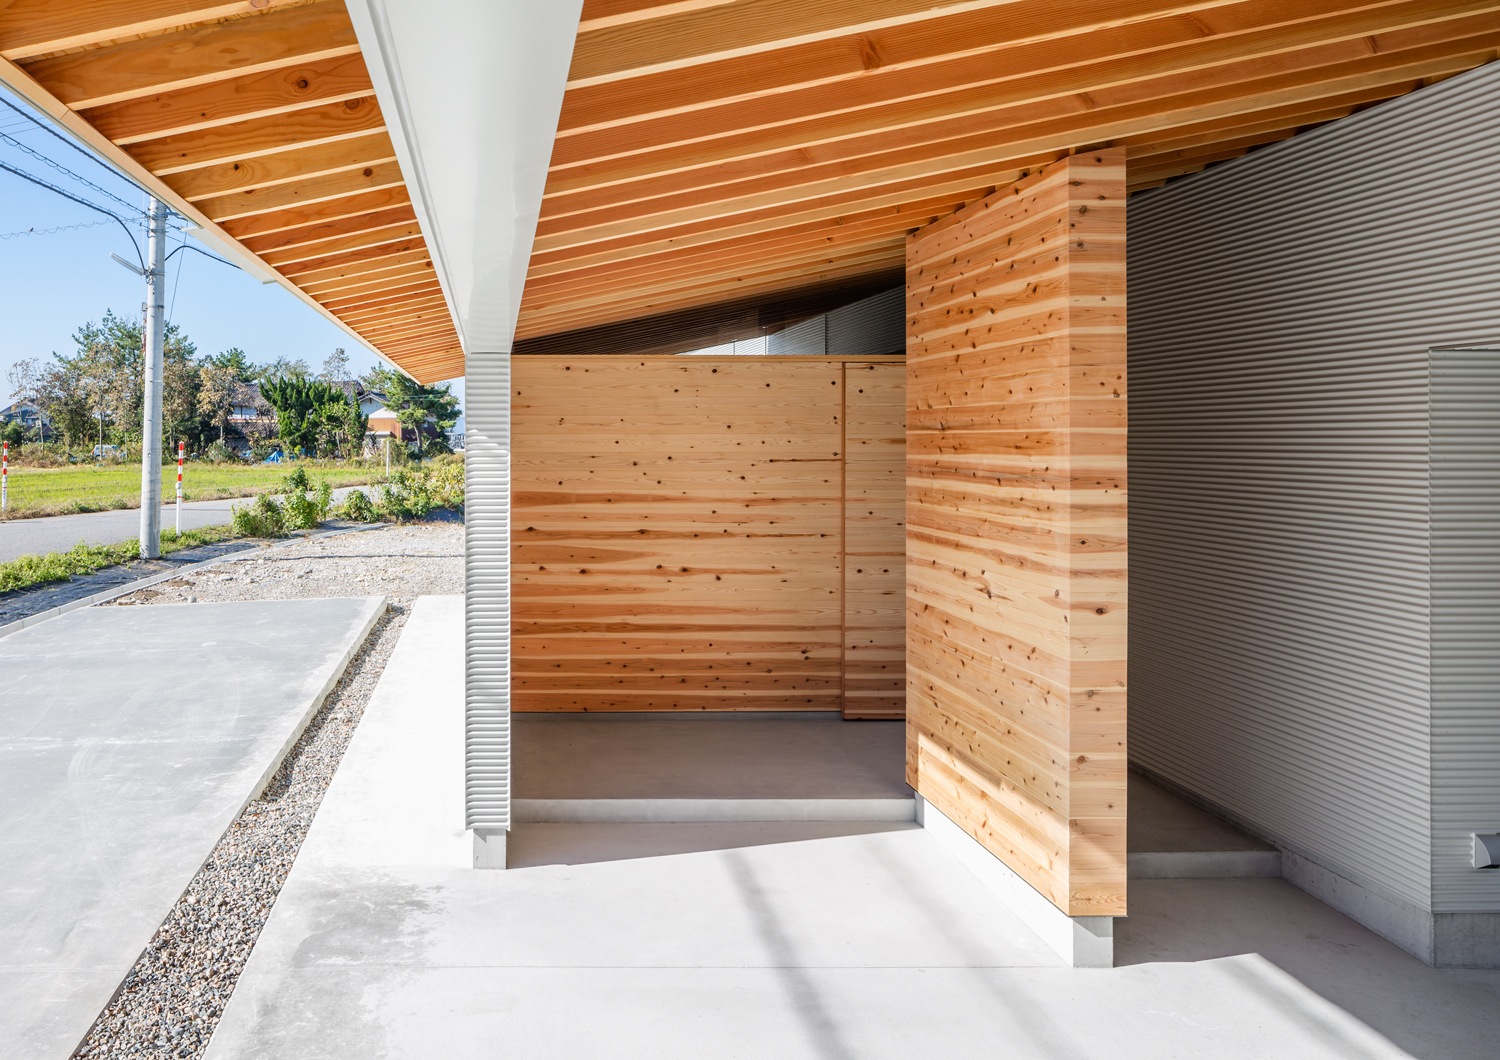 Tidal Wave Residence by Nakasai Architects